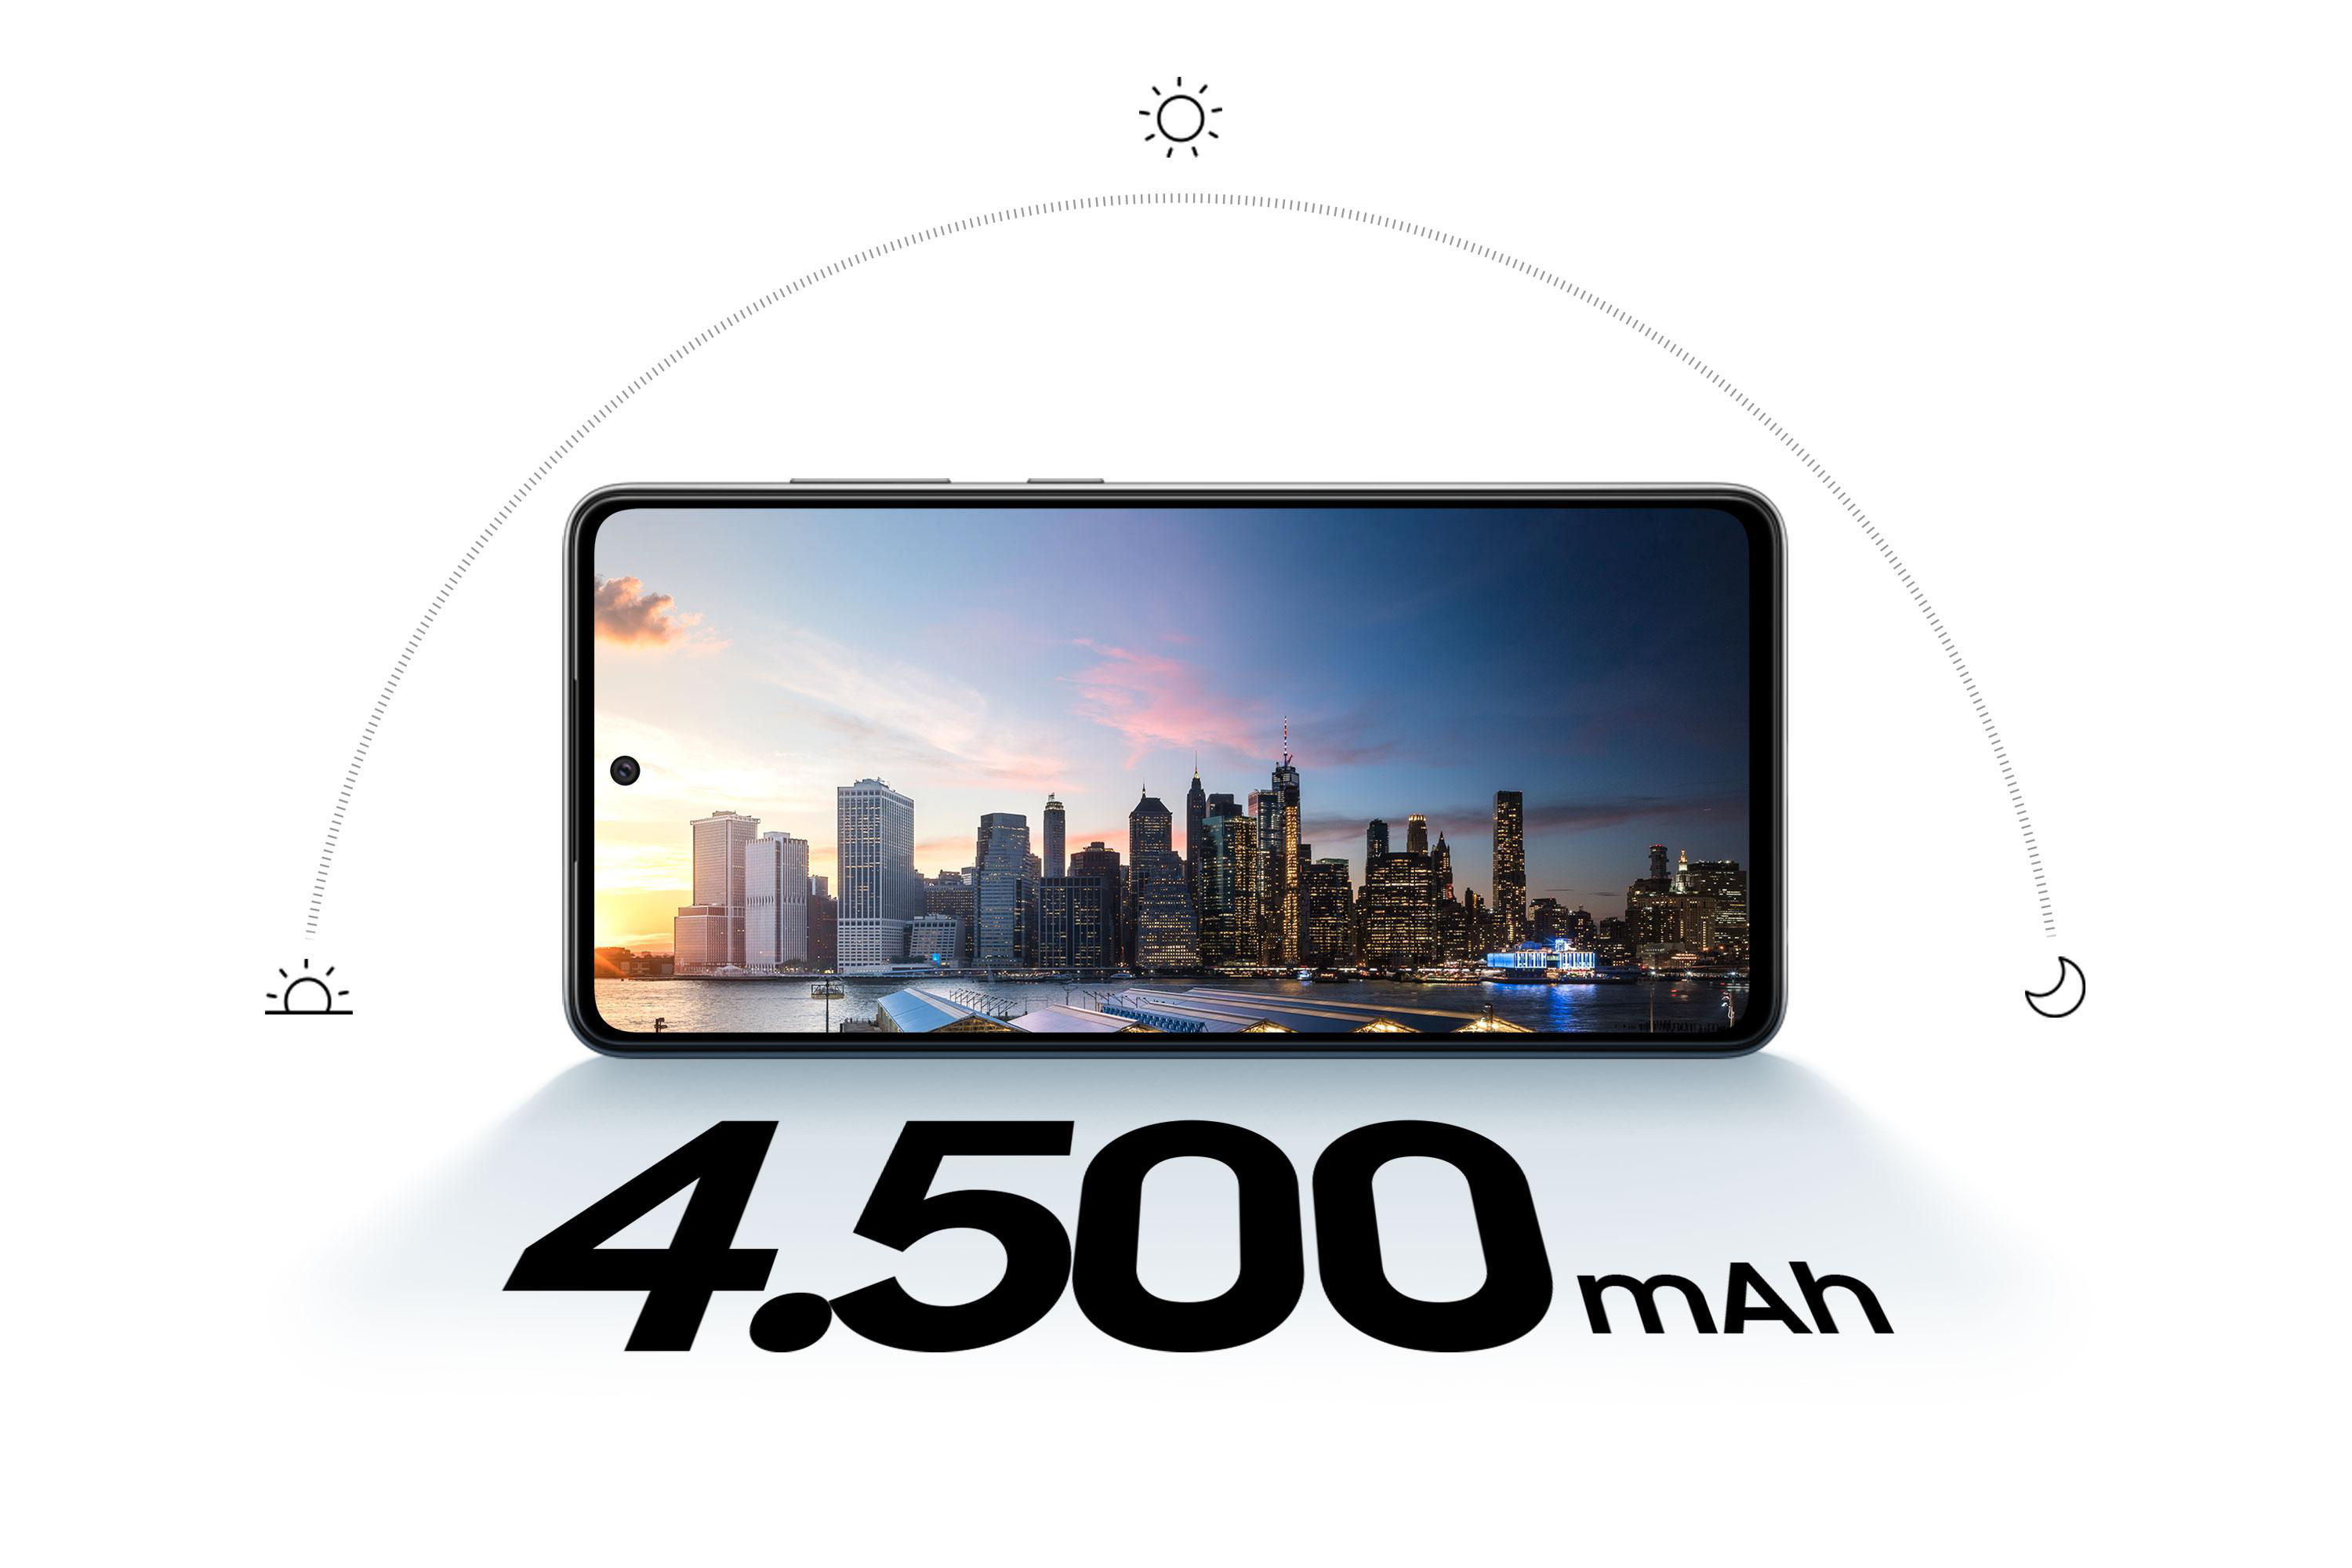 5G Dual SIM GB SAMSUNG A52 Galaxy Awesome White 128